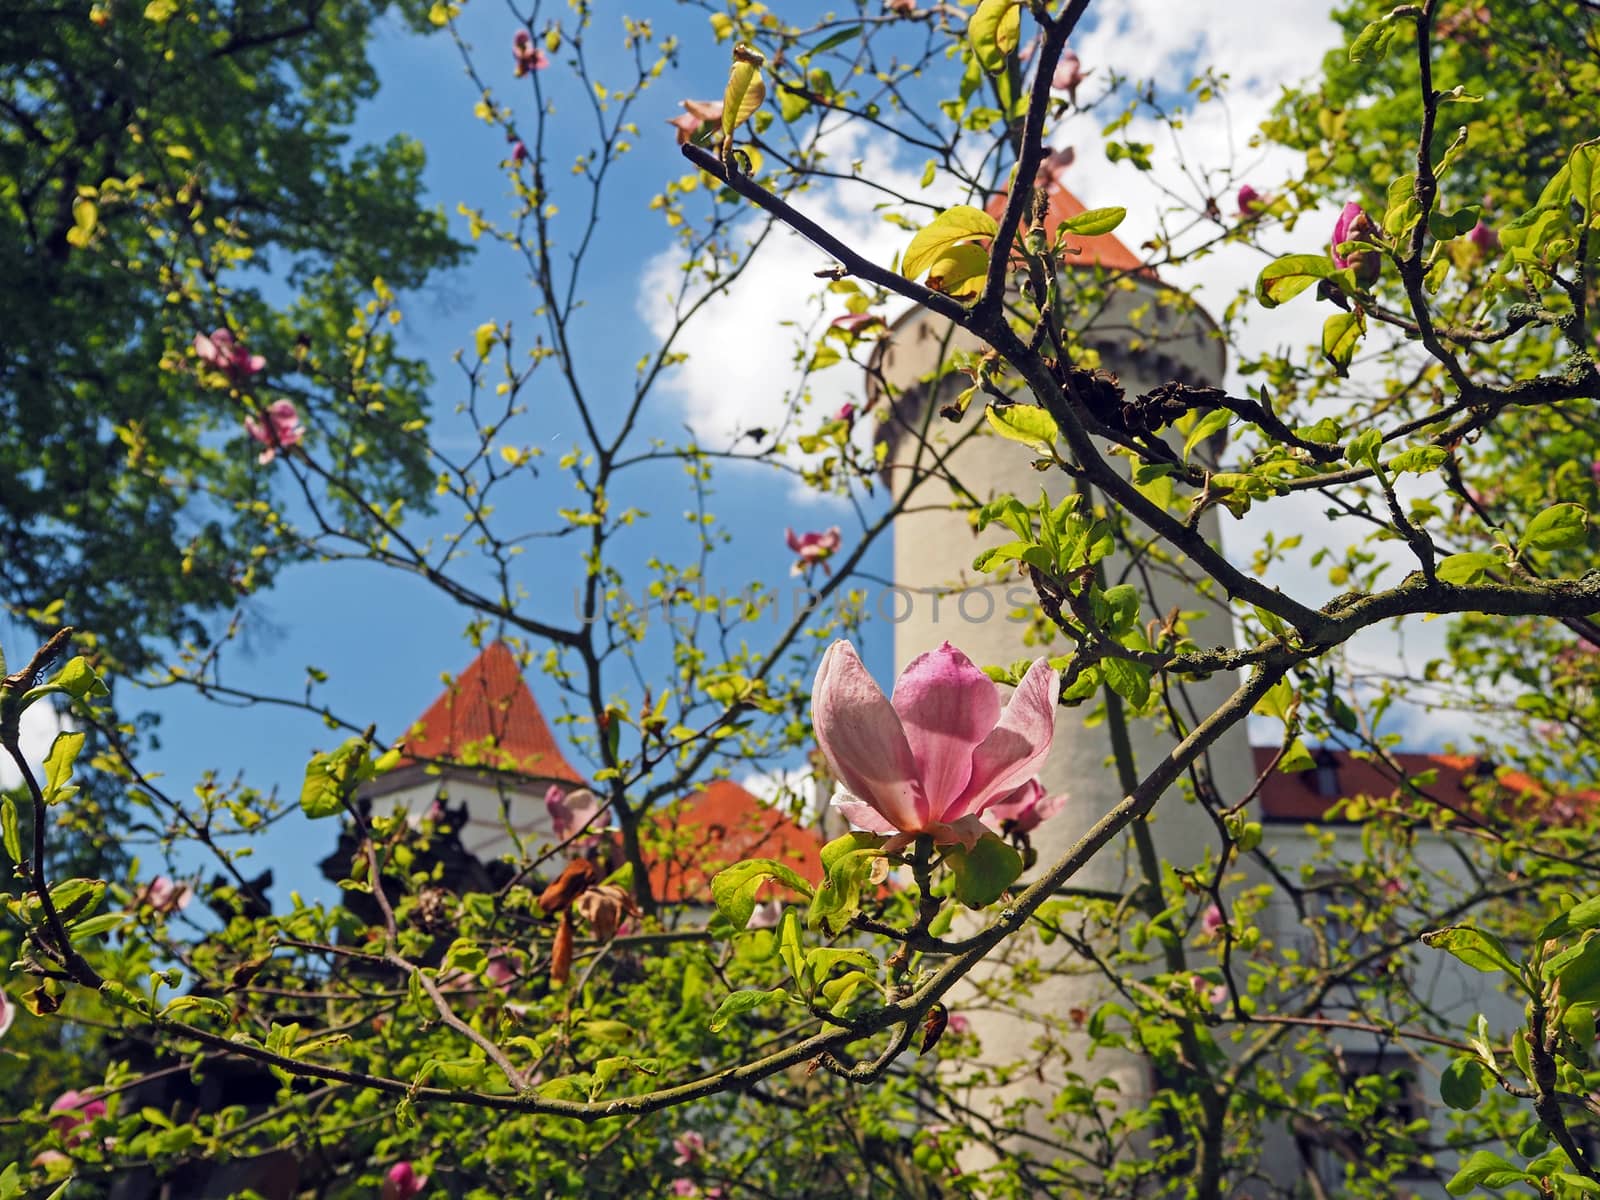 Pink close up magnolia flower forward Czech state castle chateau Konopiste